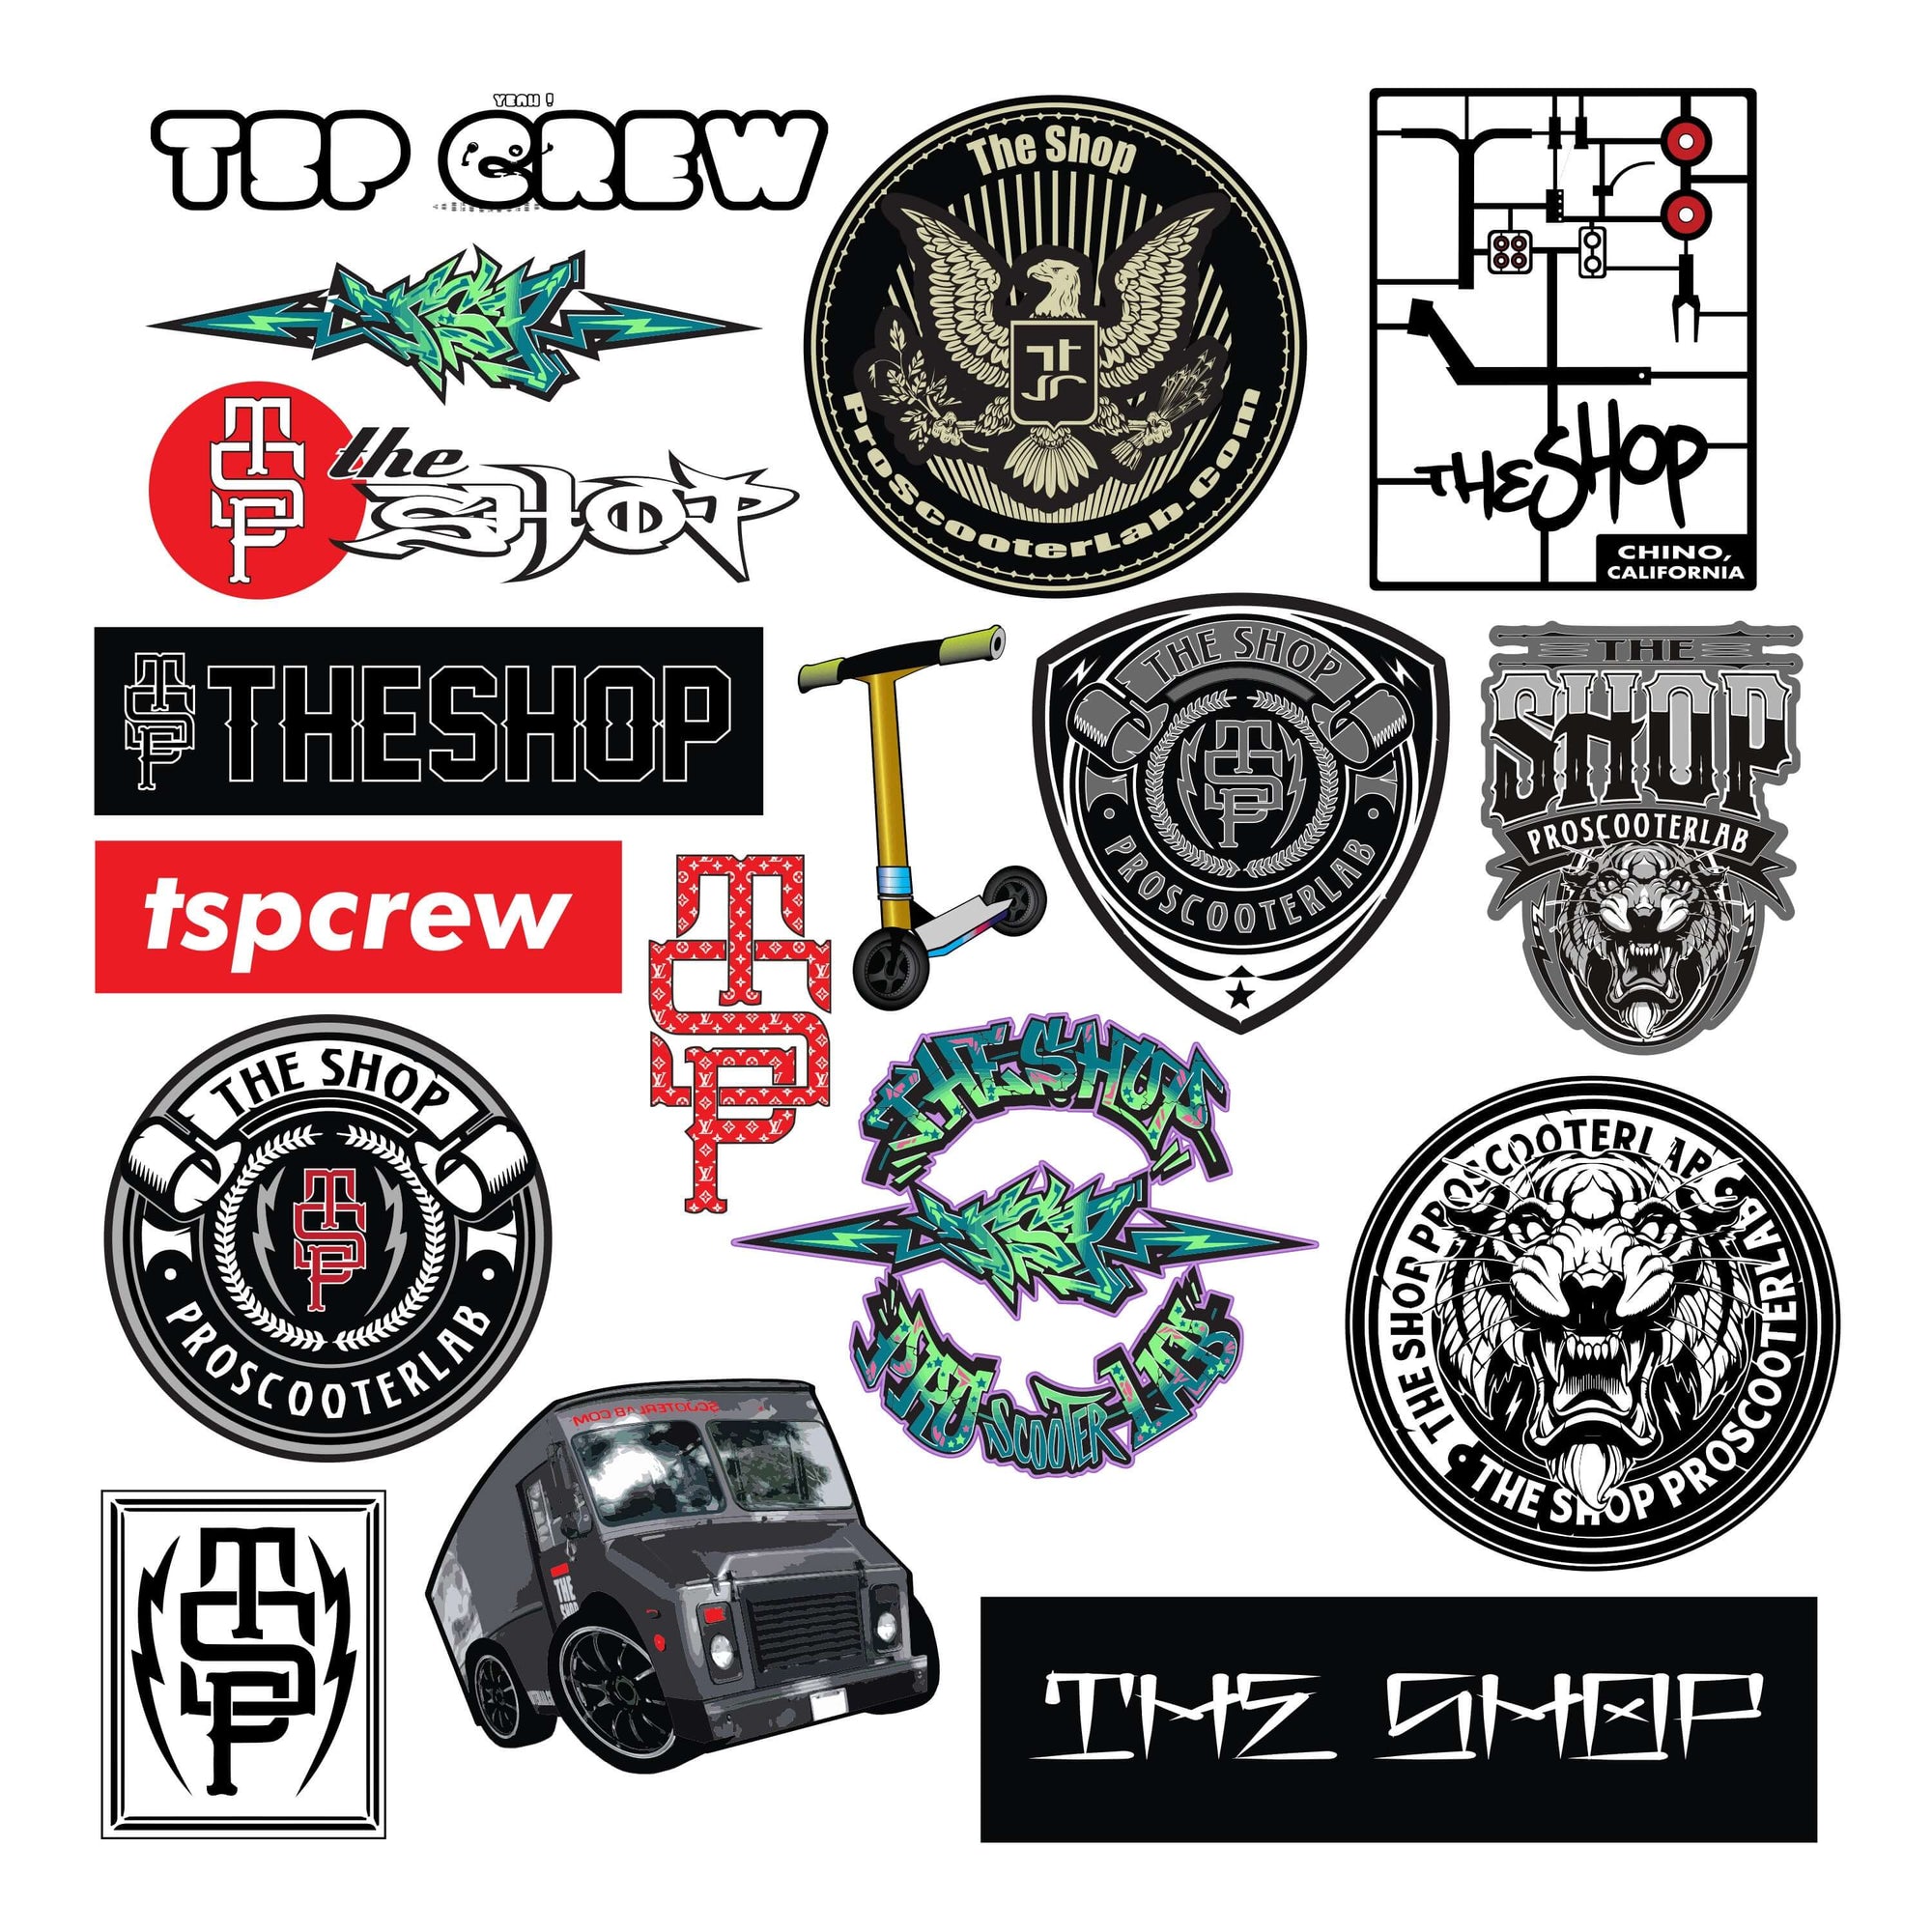 TSP Crew Classic Sticker Sheet |STICKERS |$8.00 |TSP The Shop | TSP Crew Classic Sticker Sheet | The Shop Pro Scooter Lab |